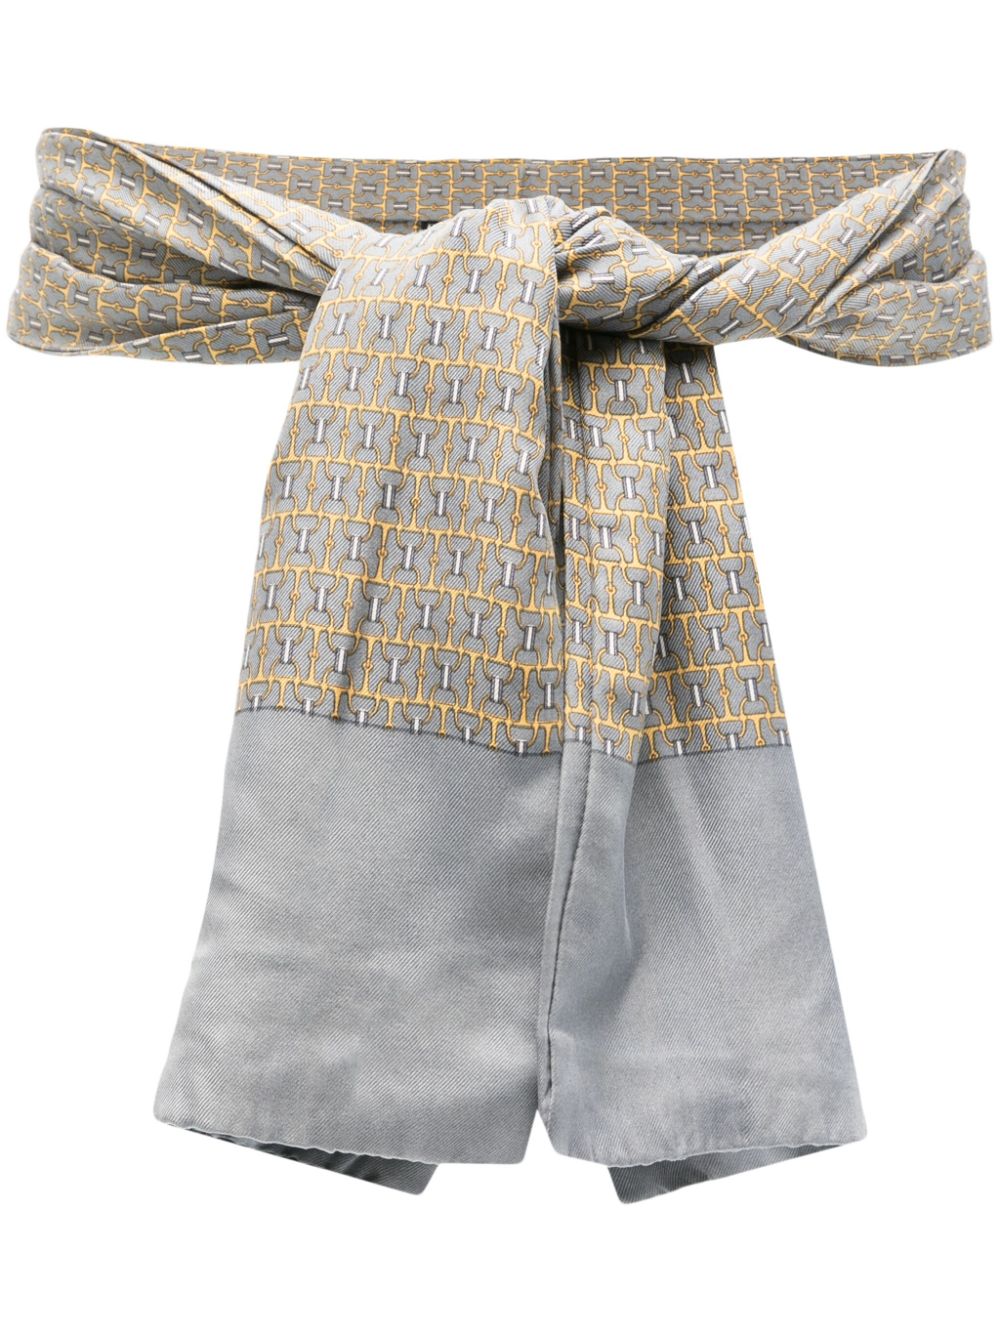 1990s Ascot silk scarf